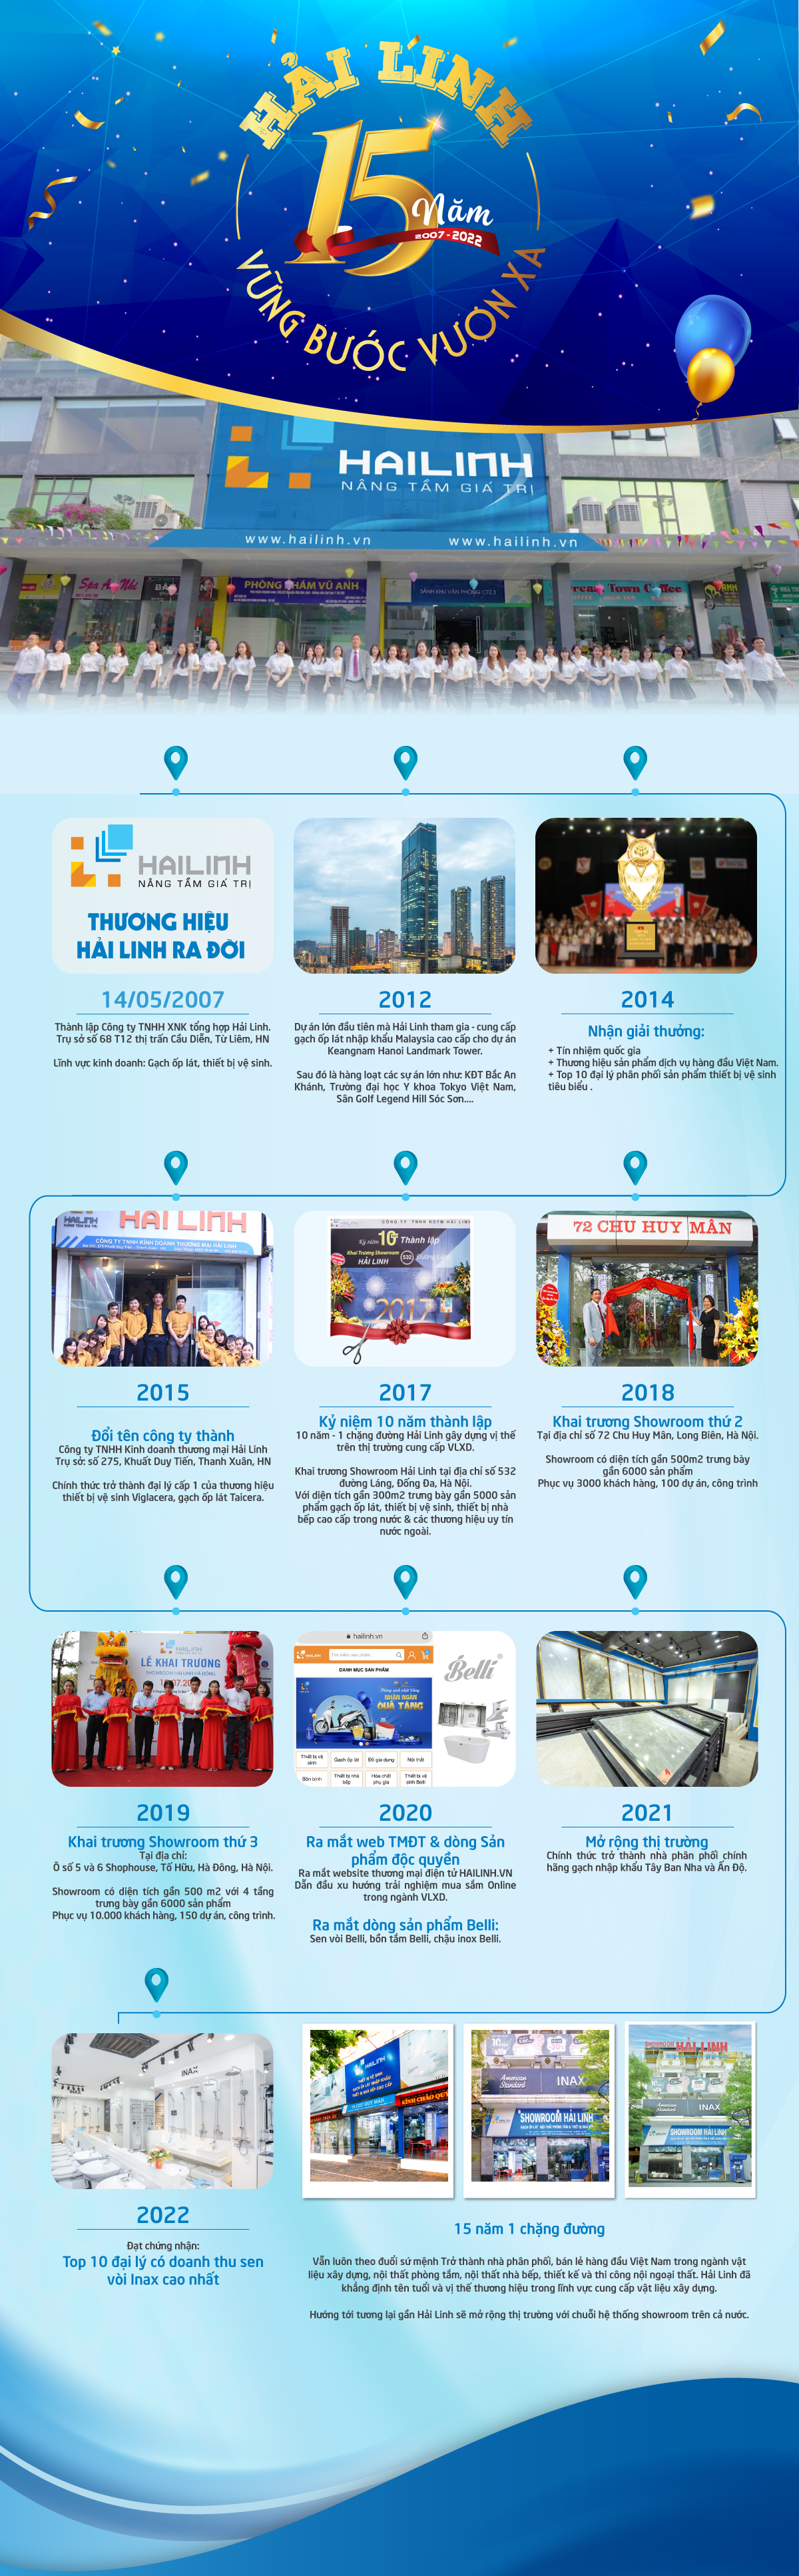 infographic-hah trinh hai linh 15-nam phat trien 2007 - 2022